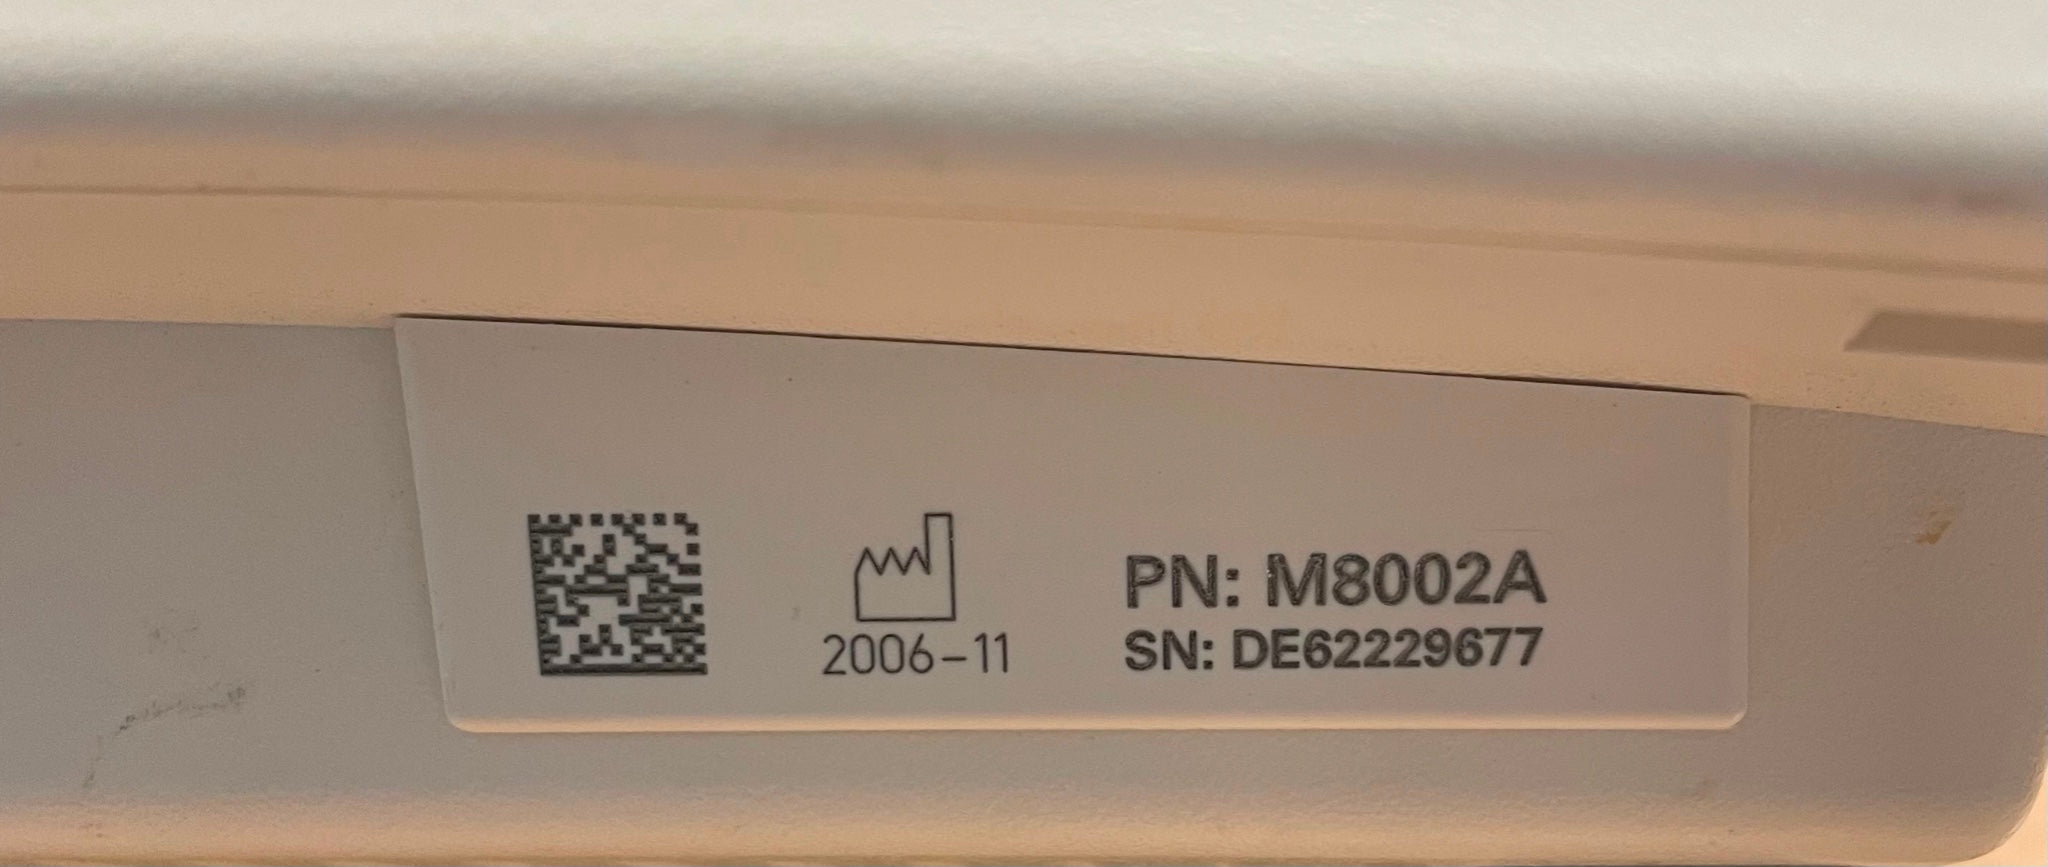 Philips IntelliVue MP30 Color Patient Monitor SN:DE62229677 REF:M8002A DIAGNOSTIC ULTRASOUND MACHINES FOR SALE